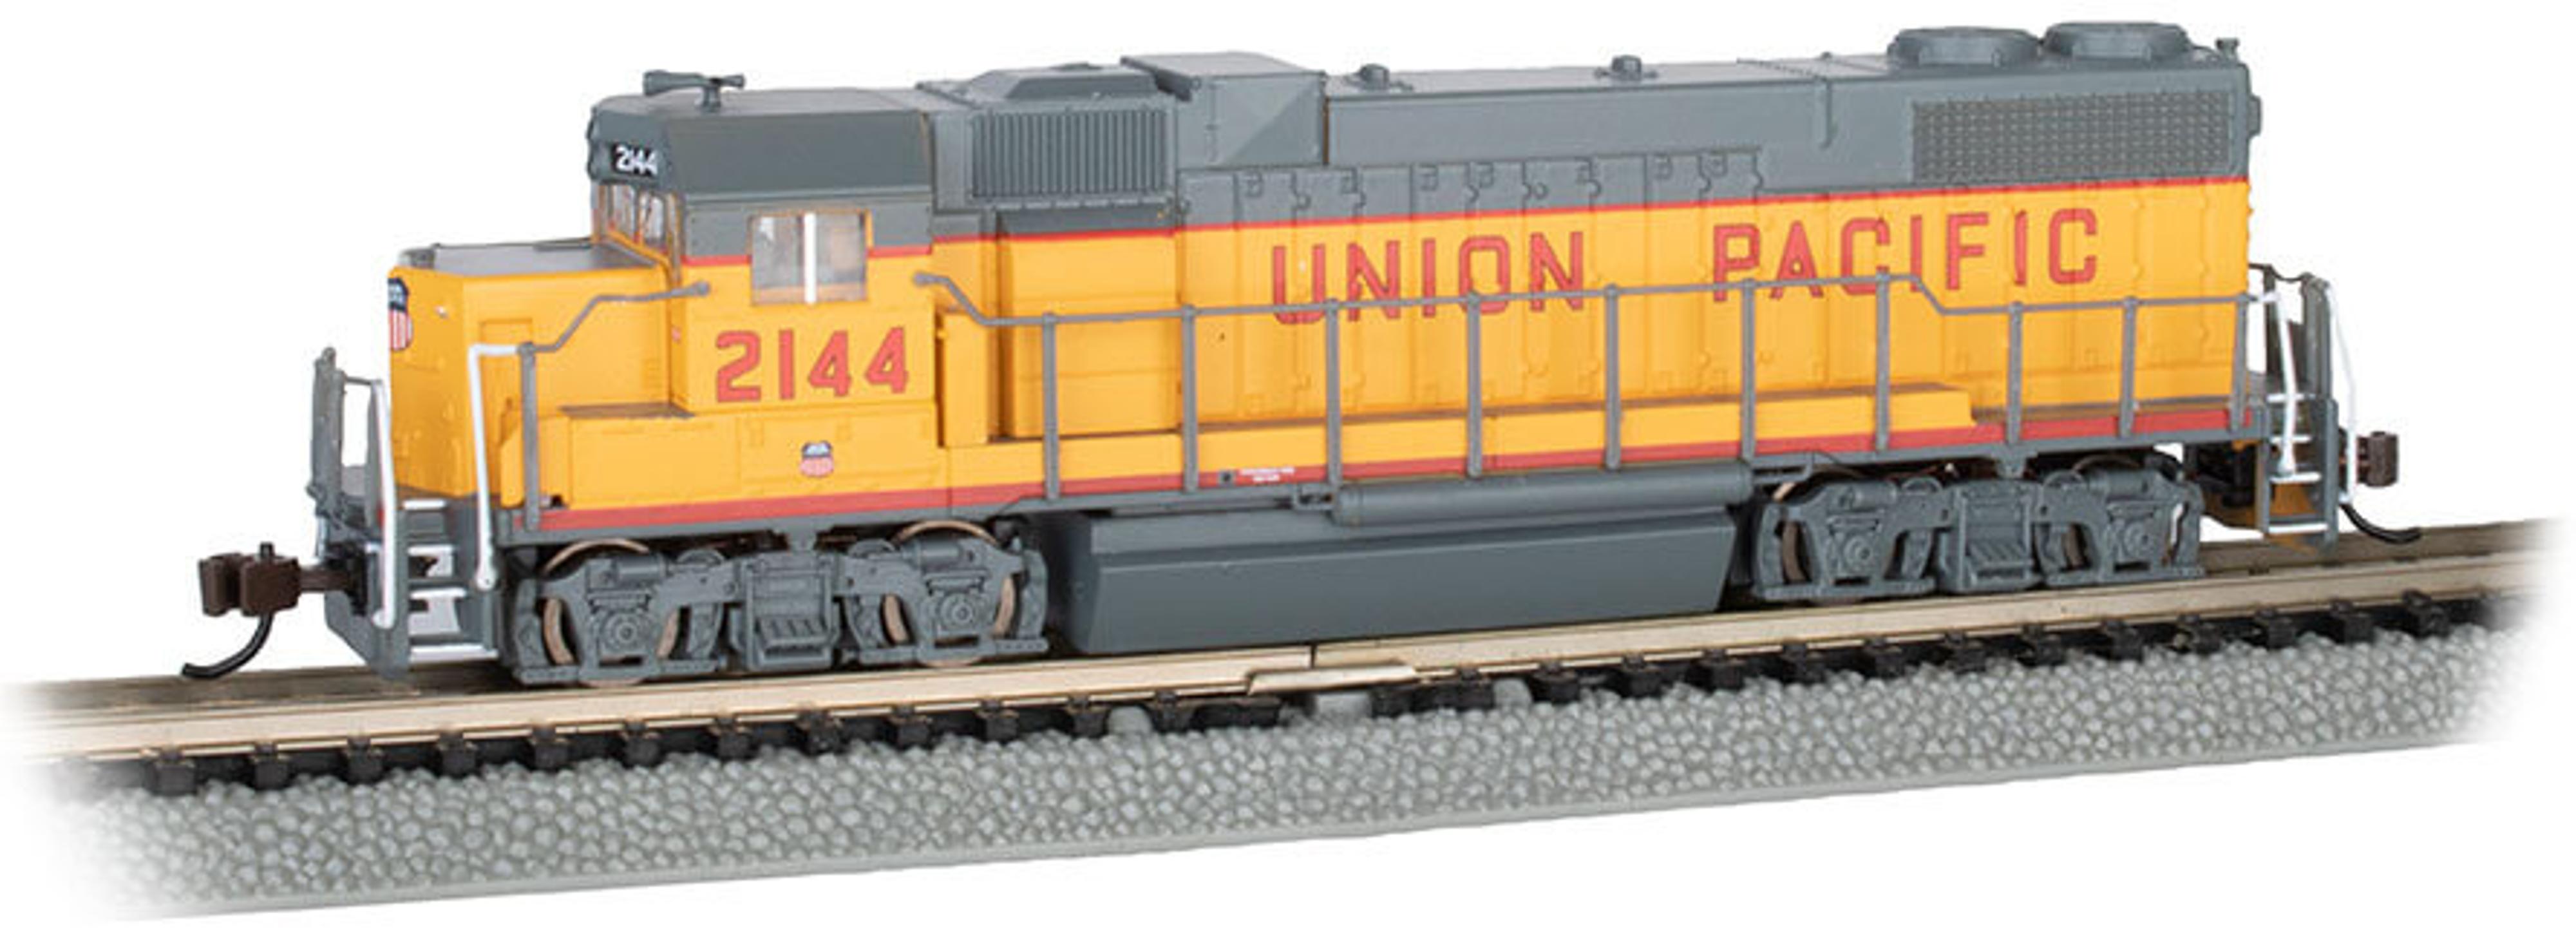 N Union Pacific #2144 (w/o Dynamic Brakes)